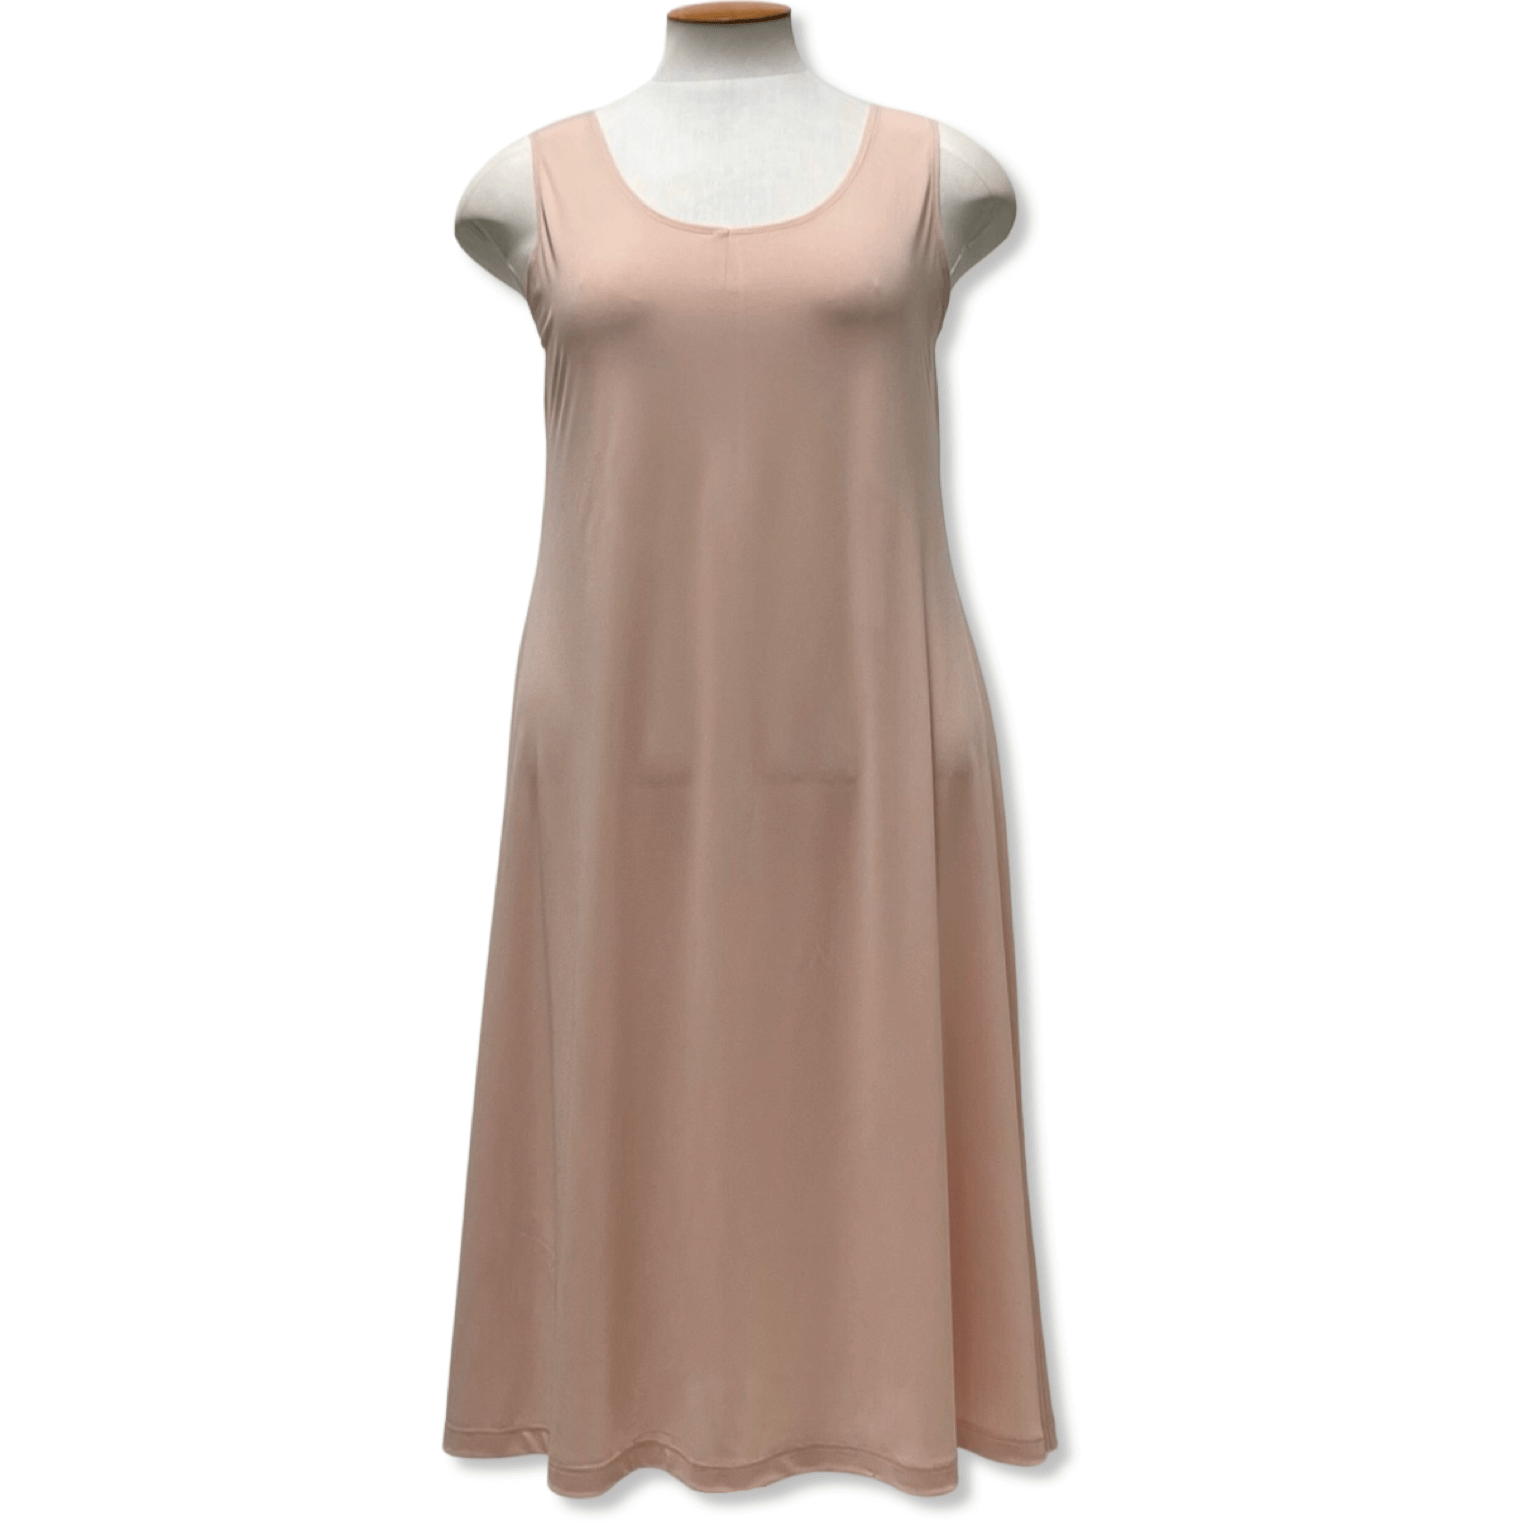 Bloom Clothing NZ,BASIC SLIP DRESS - Nude,$169.00,